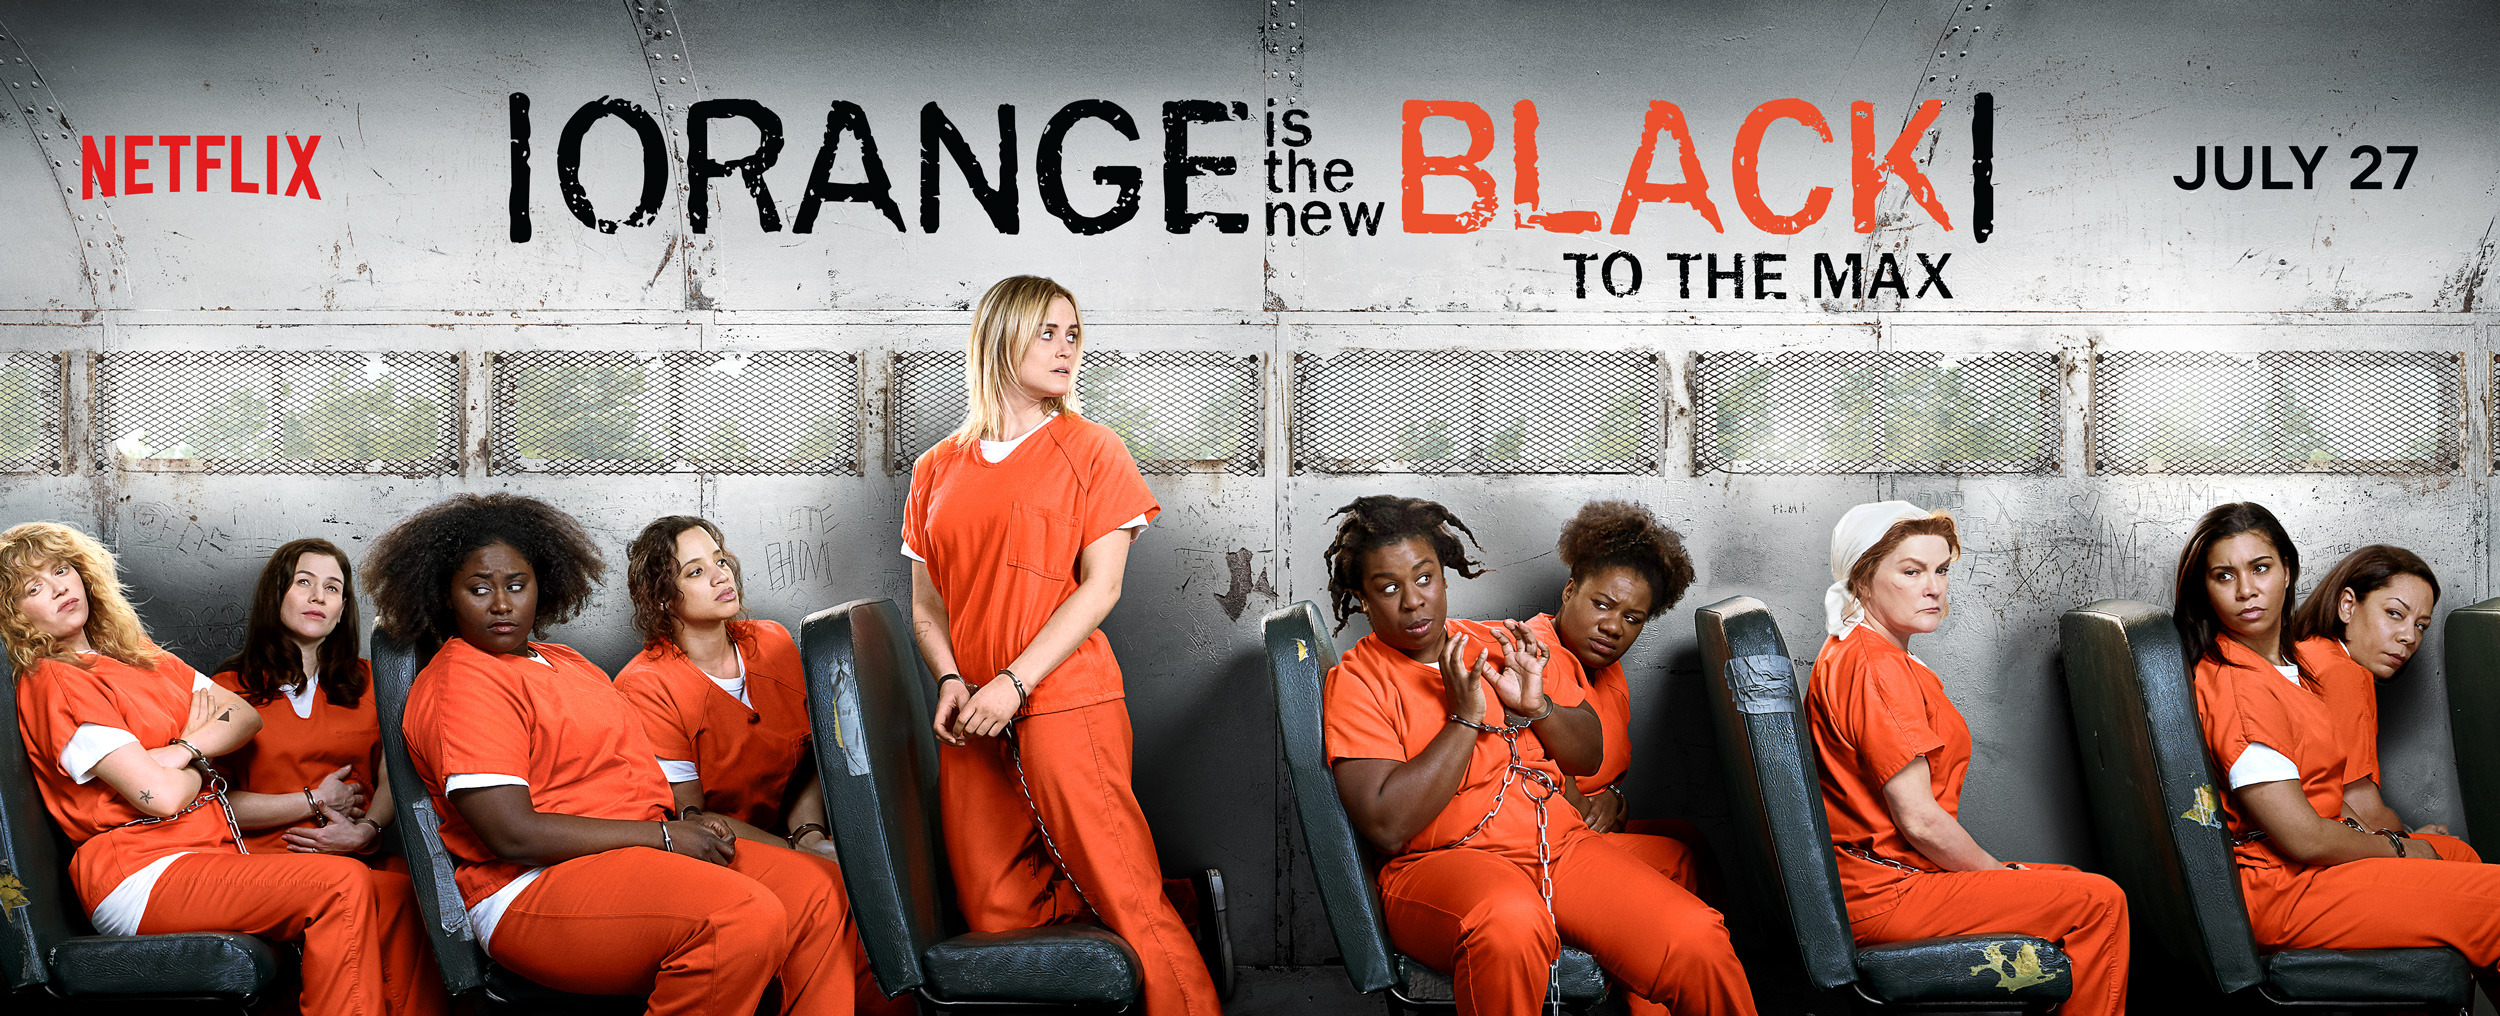 Mega Sized TV Poster Image for Orange Is the New Black (#73 of 81)